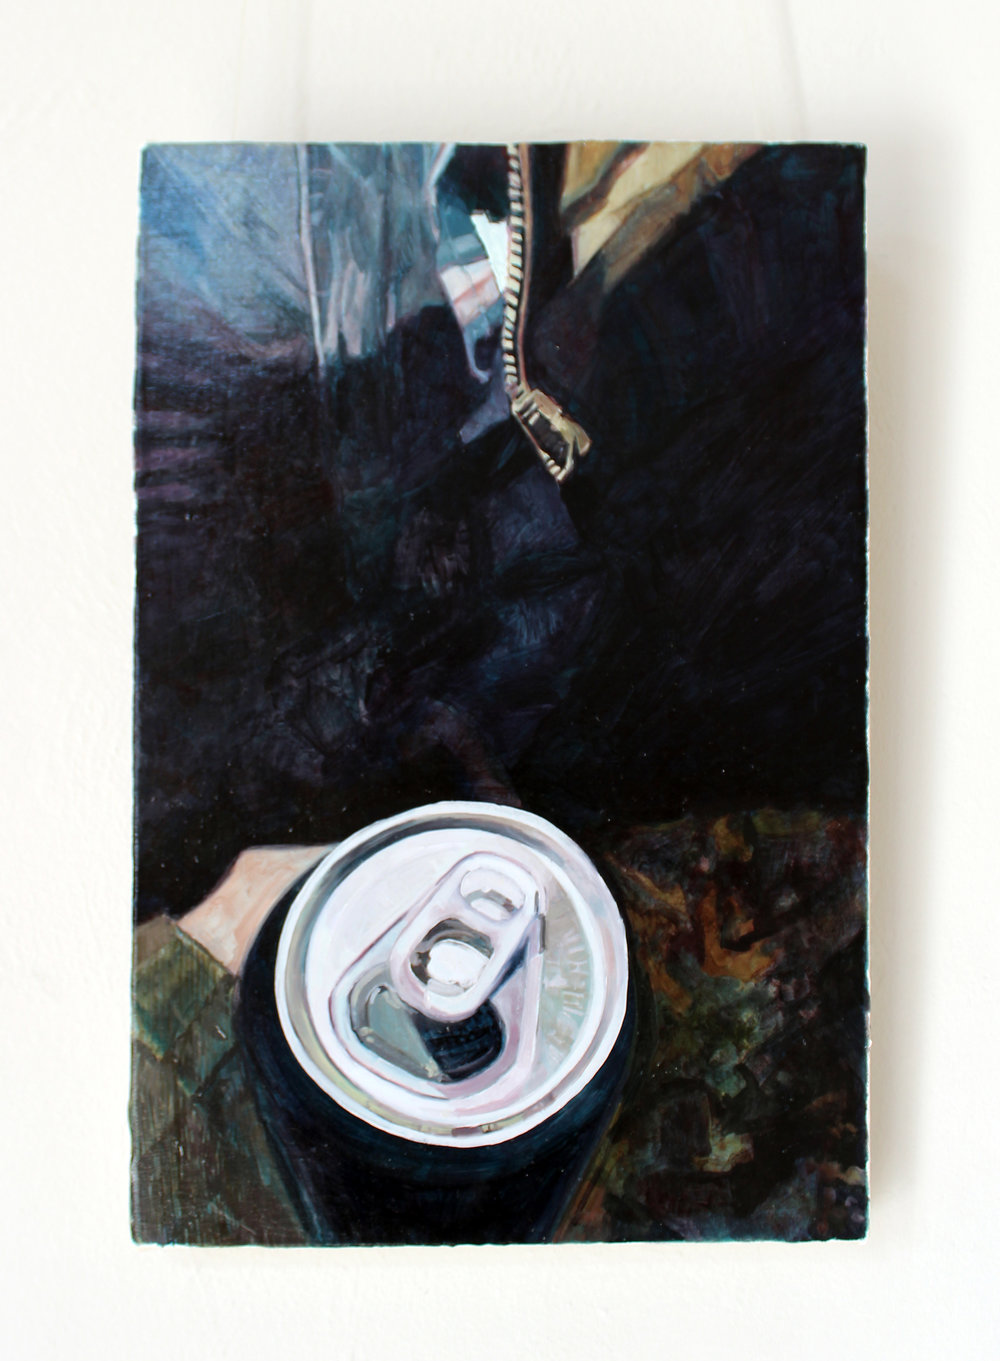 Back in Black (IPA in the winter), 2017, oil on canvas, 45 cm x 30 cm